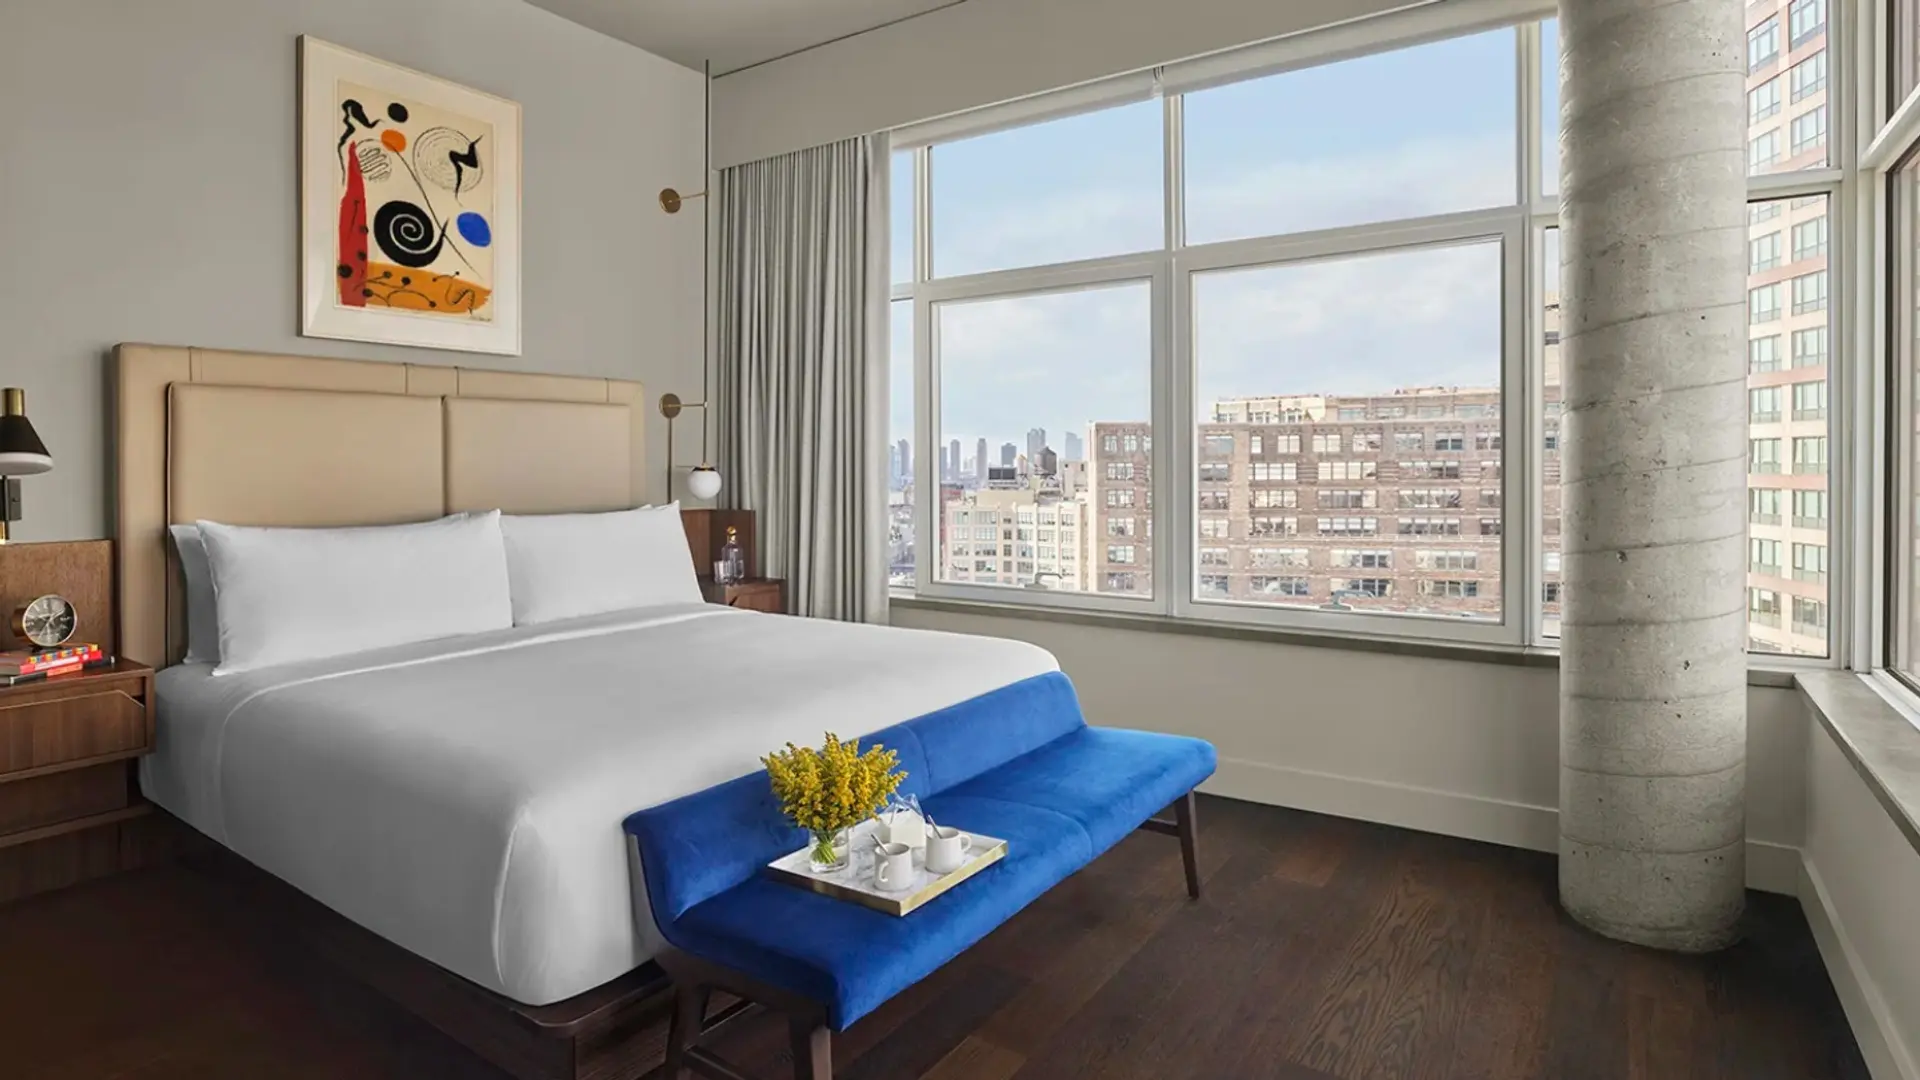 Hotel room at modernhaus soho new york